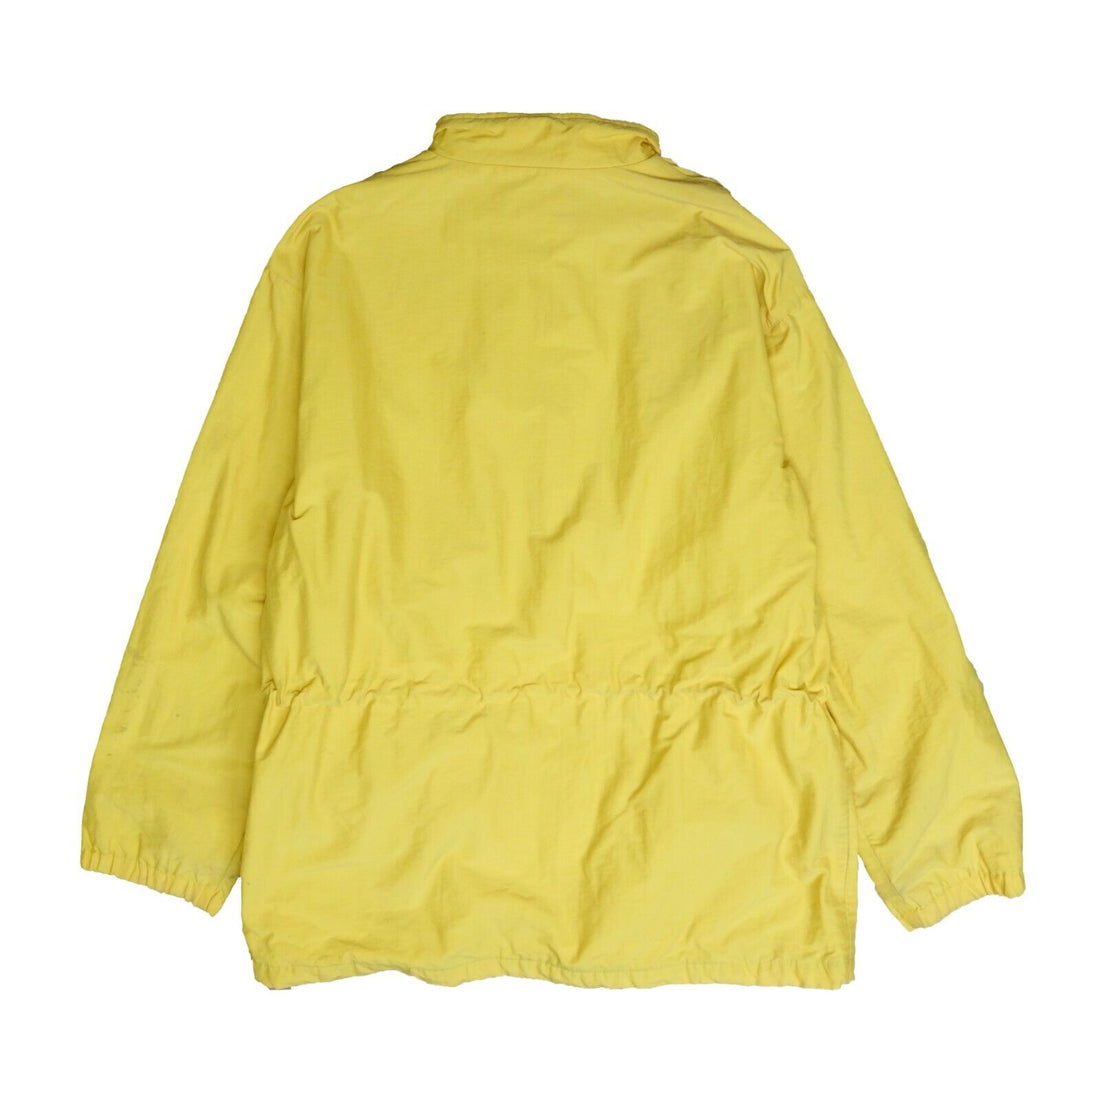 Vintage Polo Ralph Lauren Rain Coat Jacket Size Large Yellow